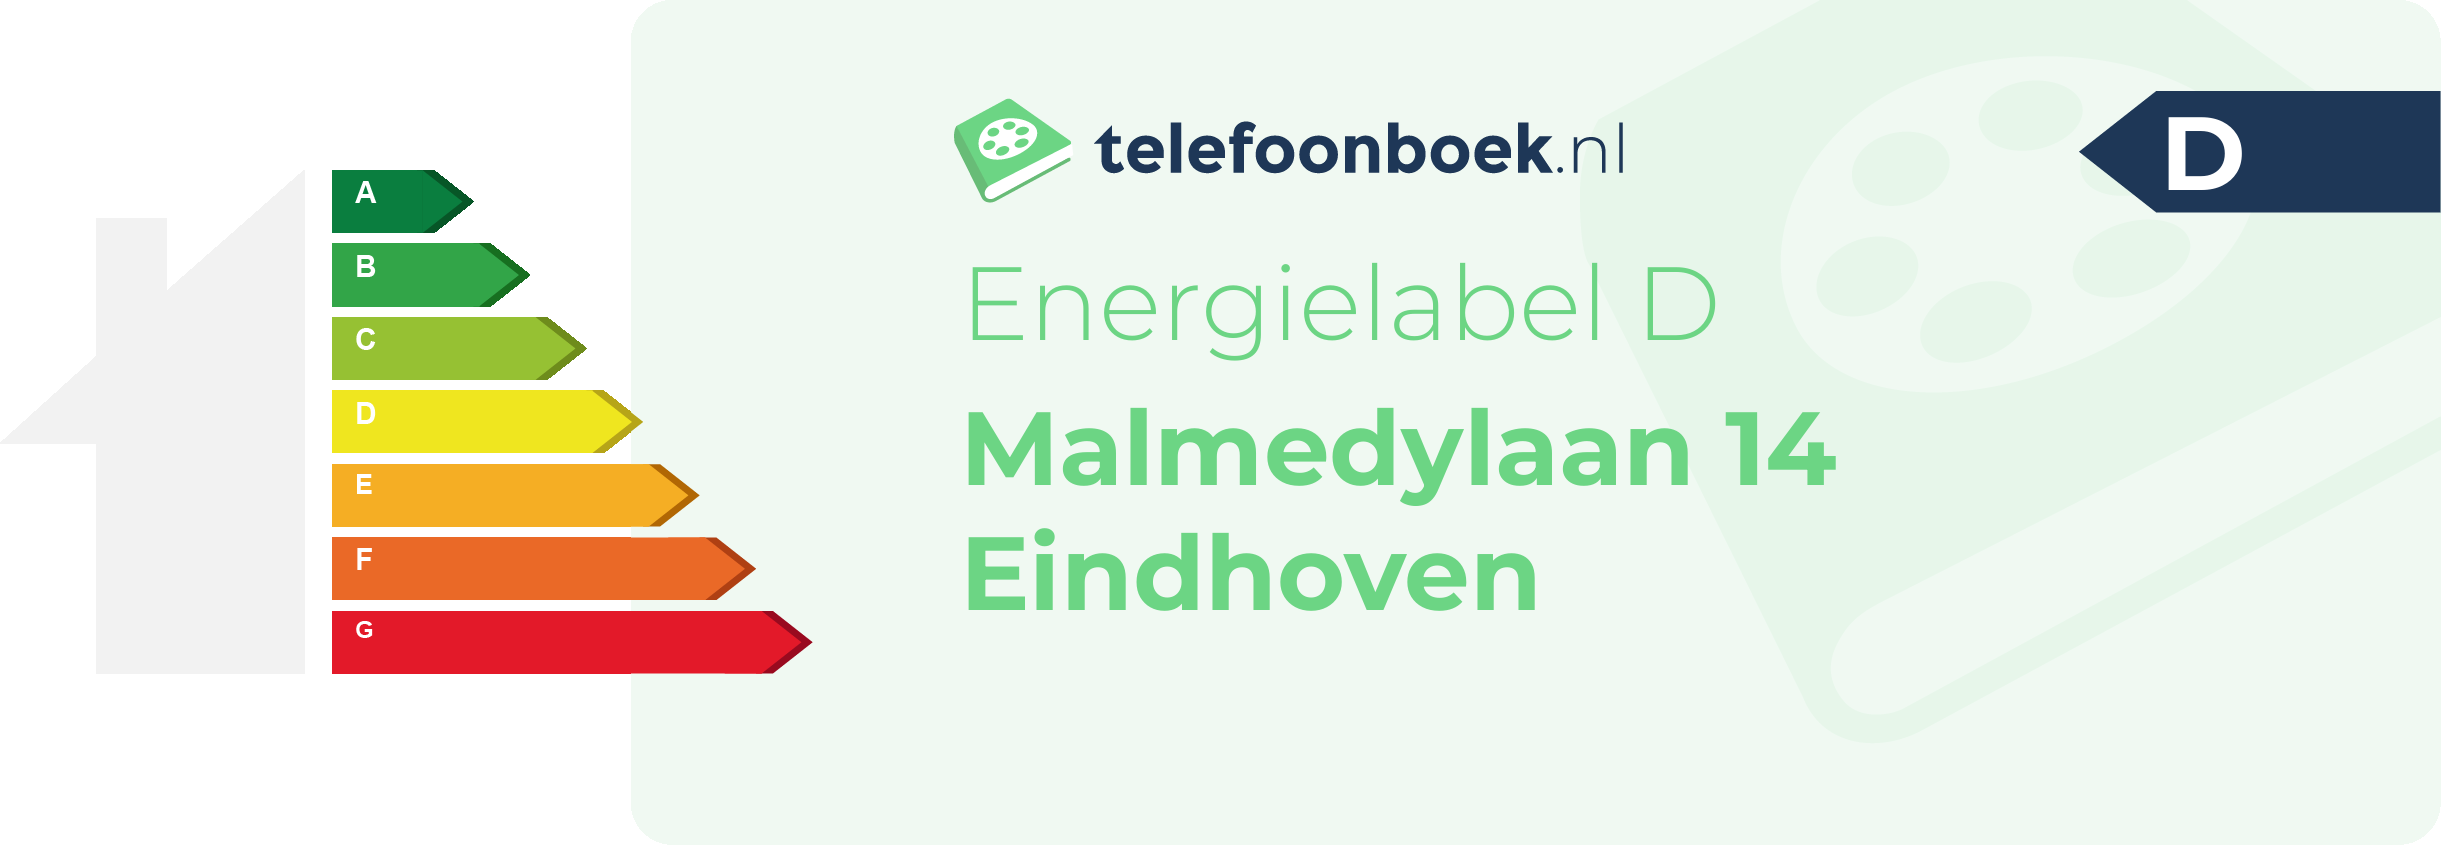 Energielabel Malmedylaan 14 Eindhoven